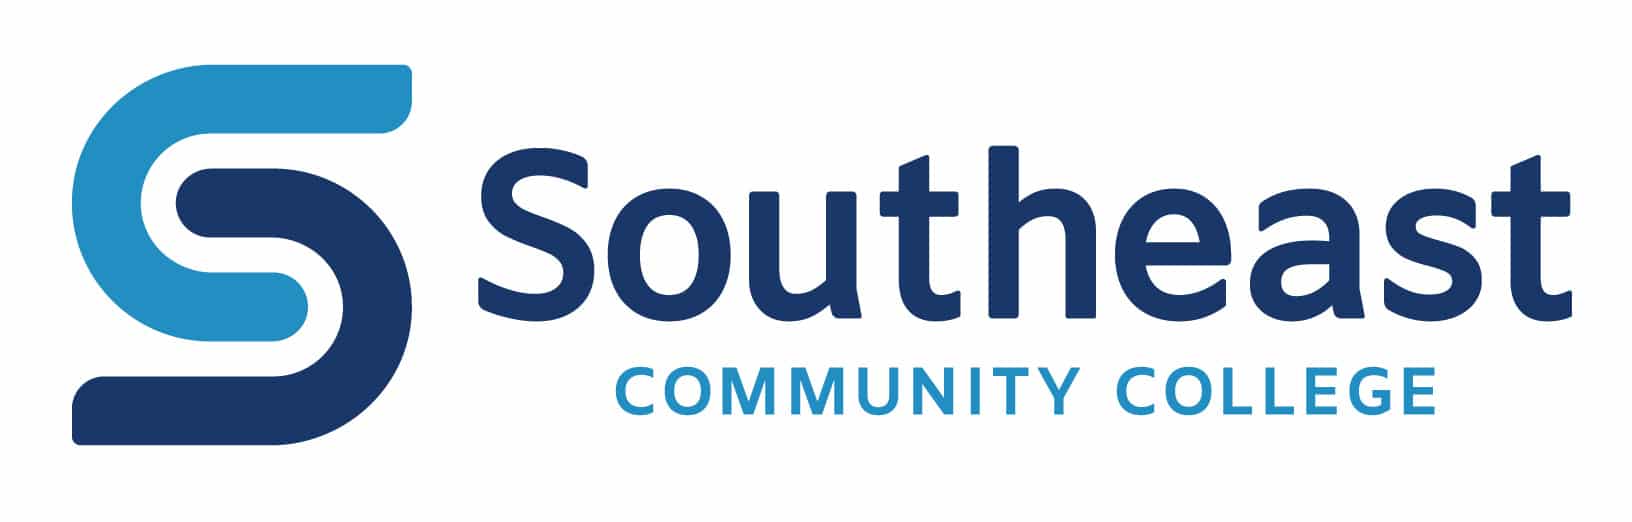 Southwest Community College